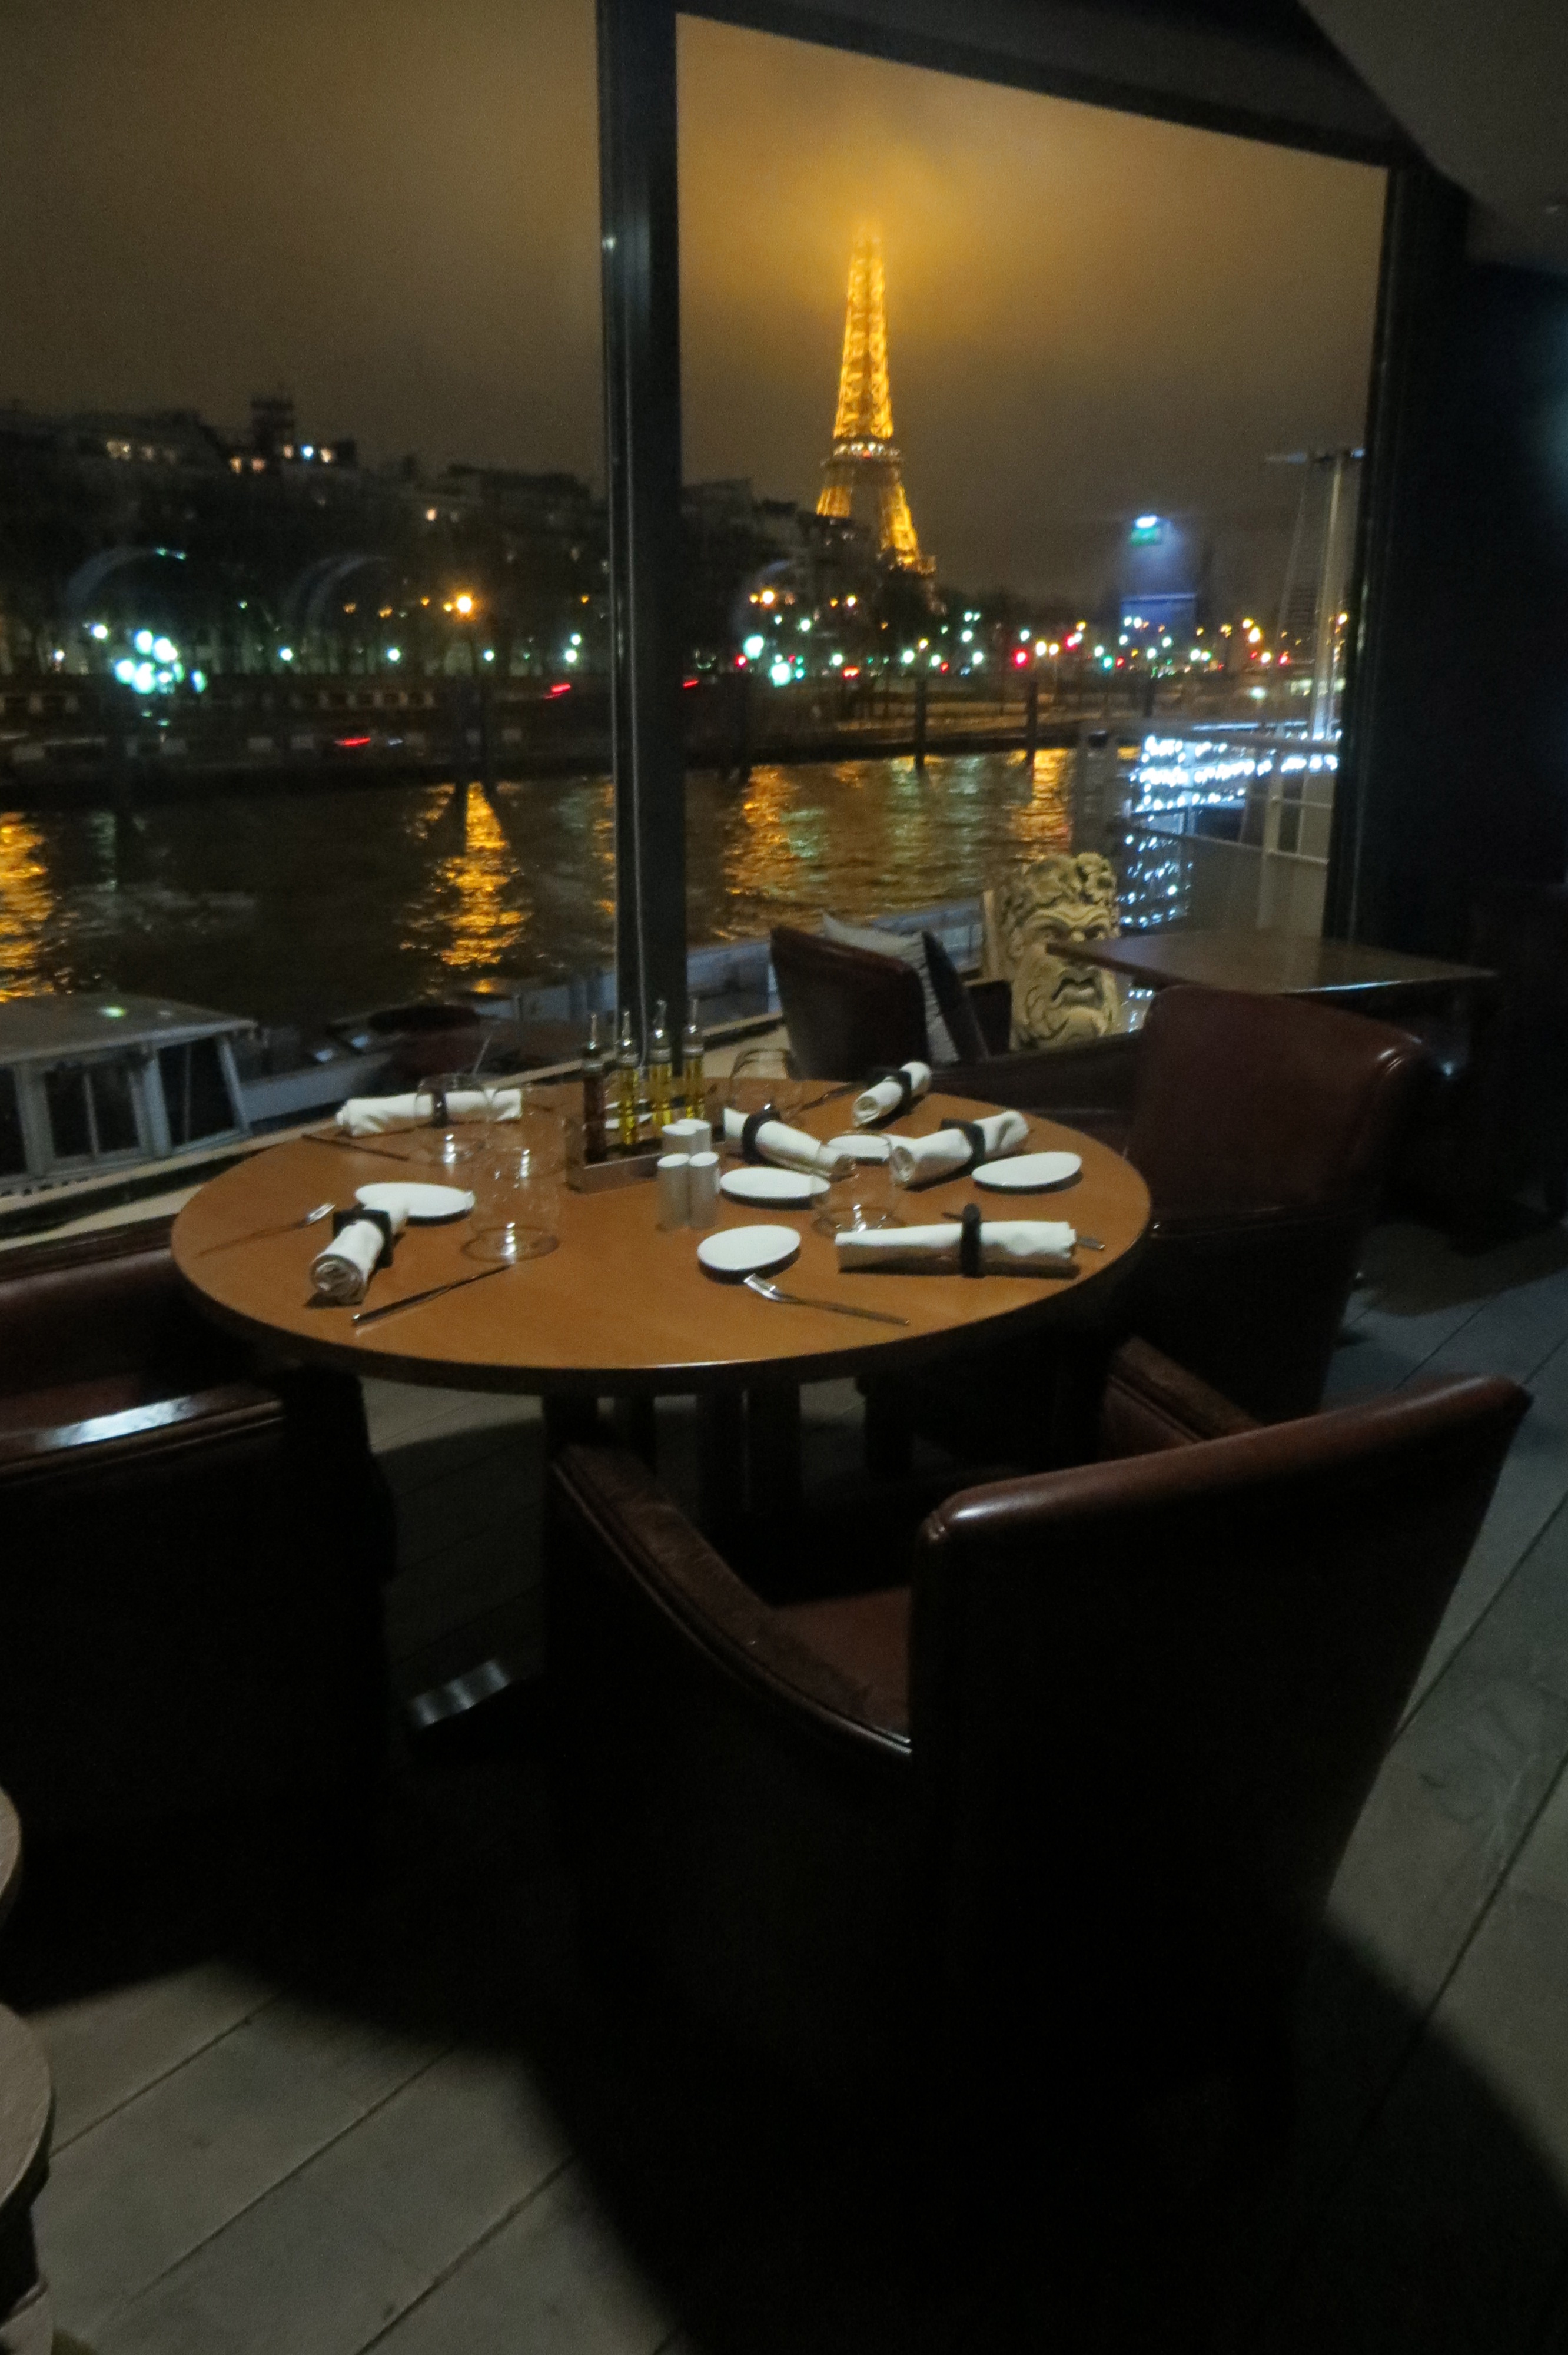 Bateaux mouches dinner cruise in Paris 